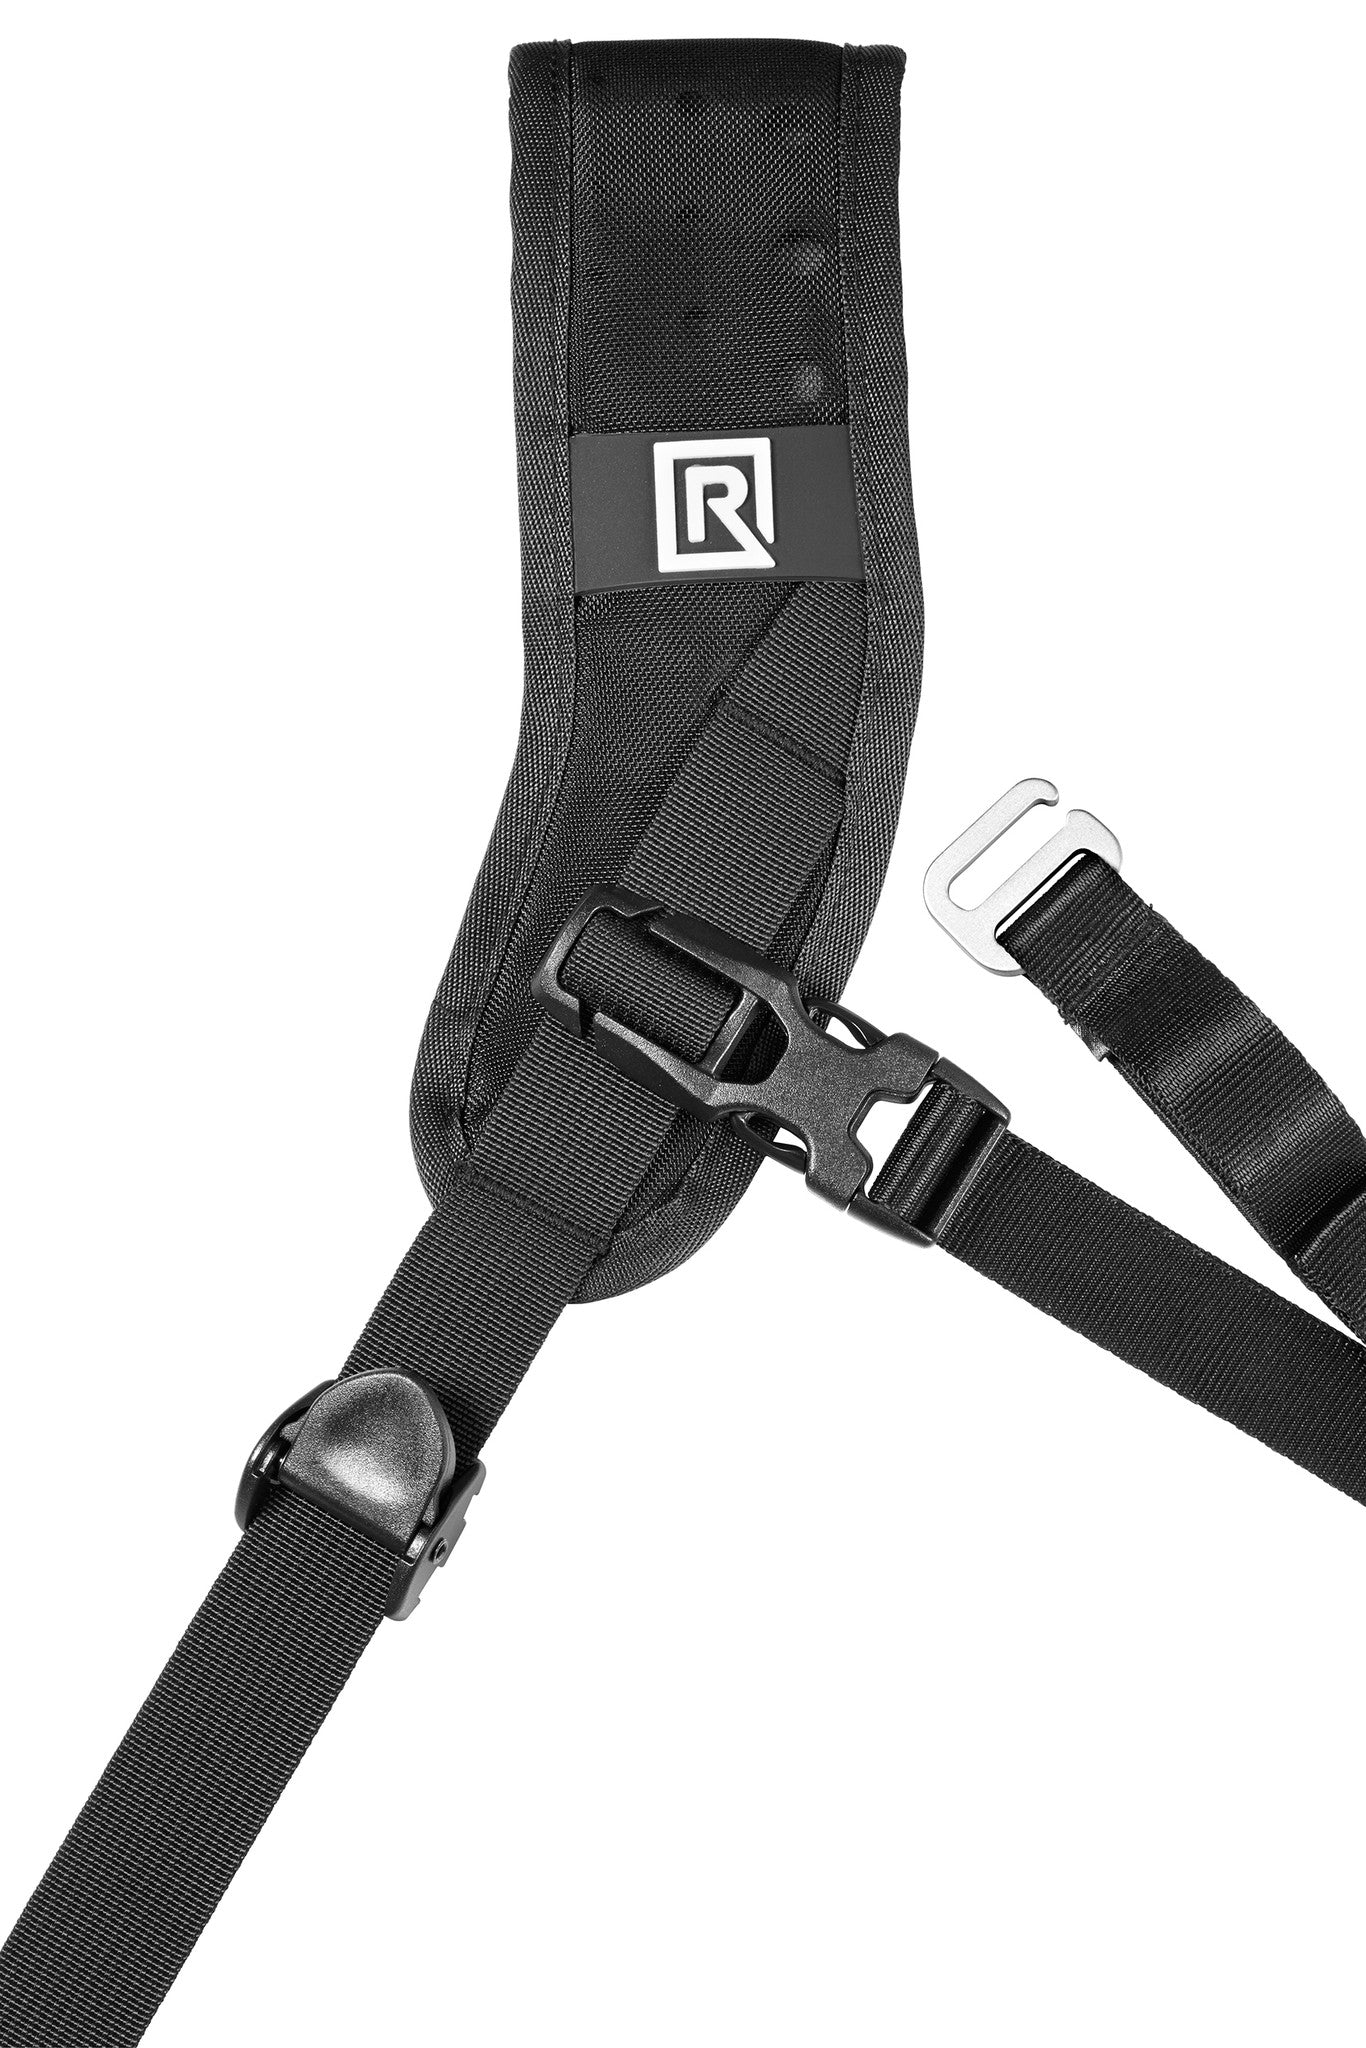 Black Rapid Sport Breathe Camera Strap, camera straps, Black Rapid - Pictureline  - 6